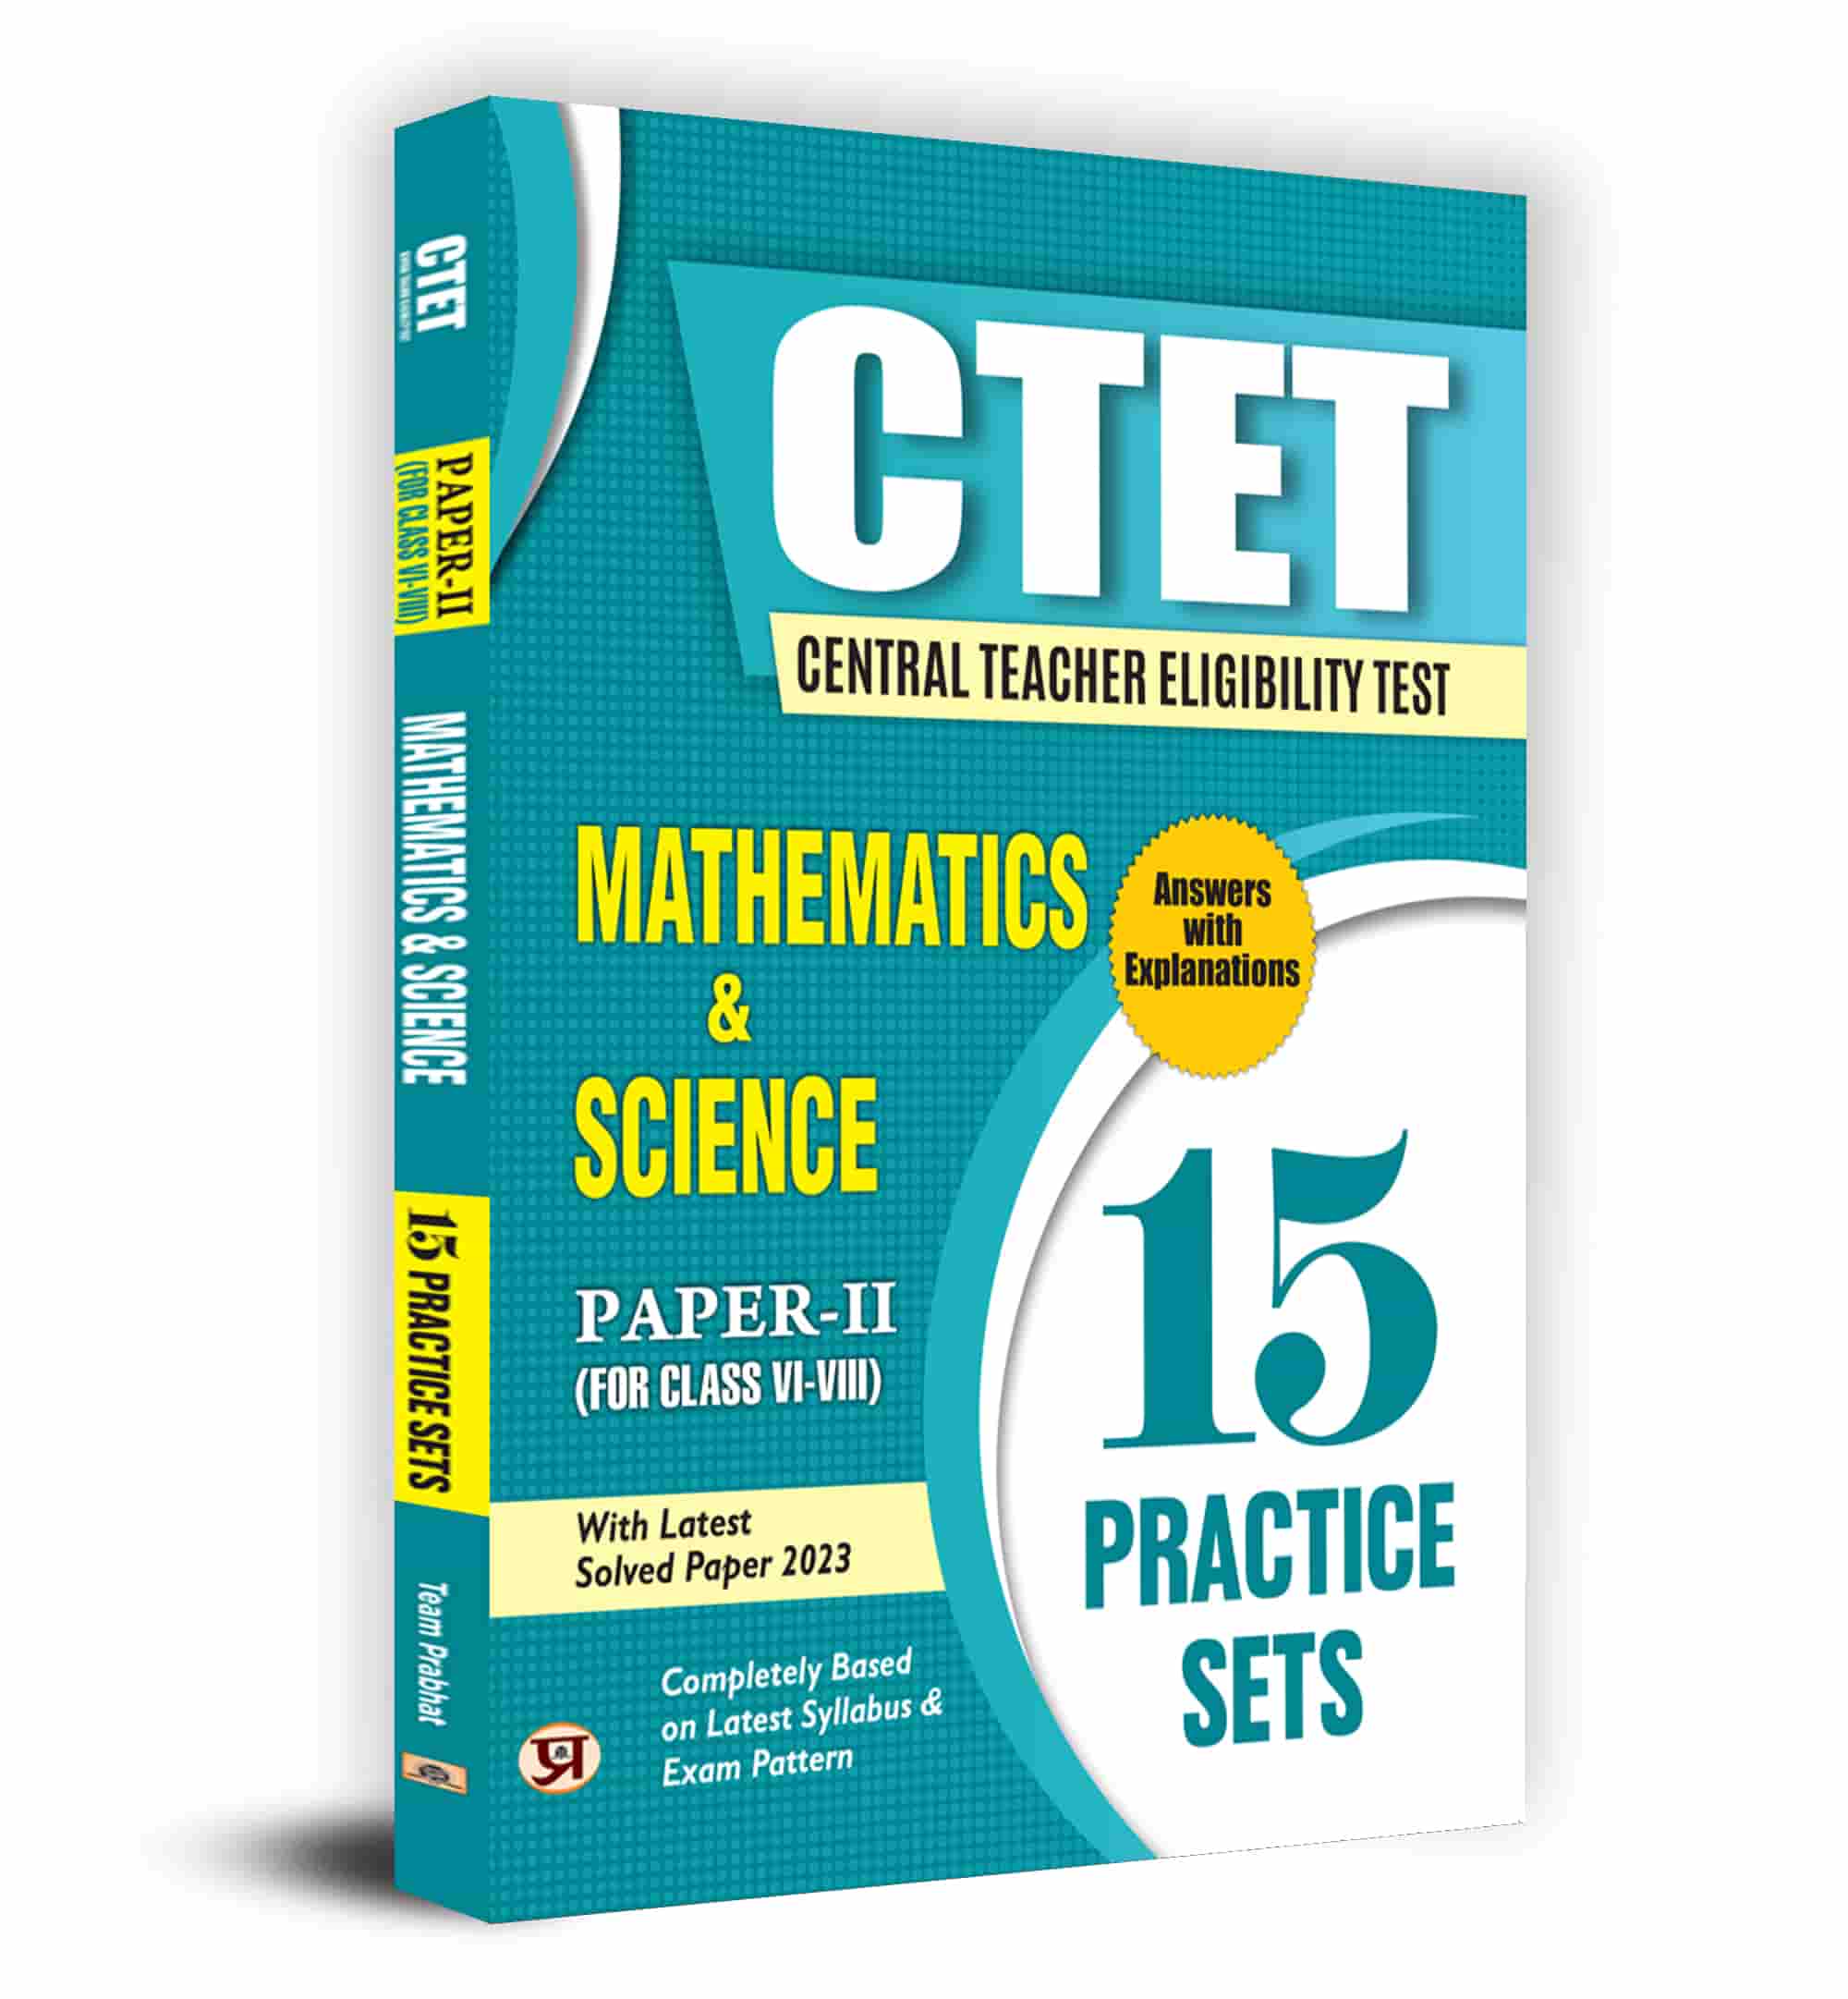 CTET Central Teacher Eligibility Test Paper-2 (Class Vi-Viii) Mathemat...